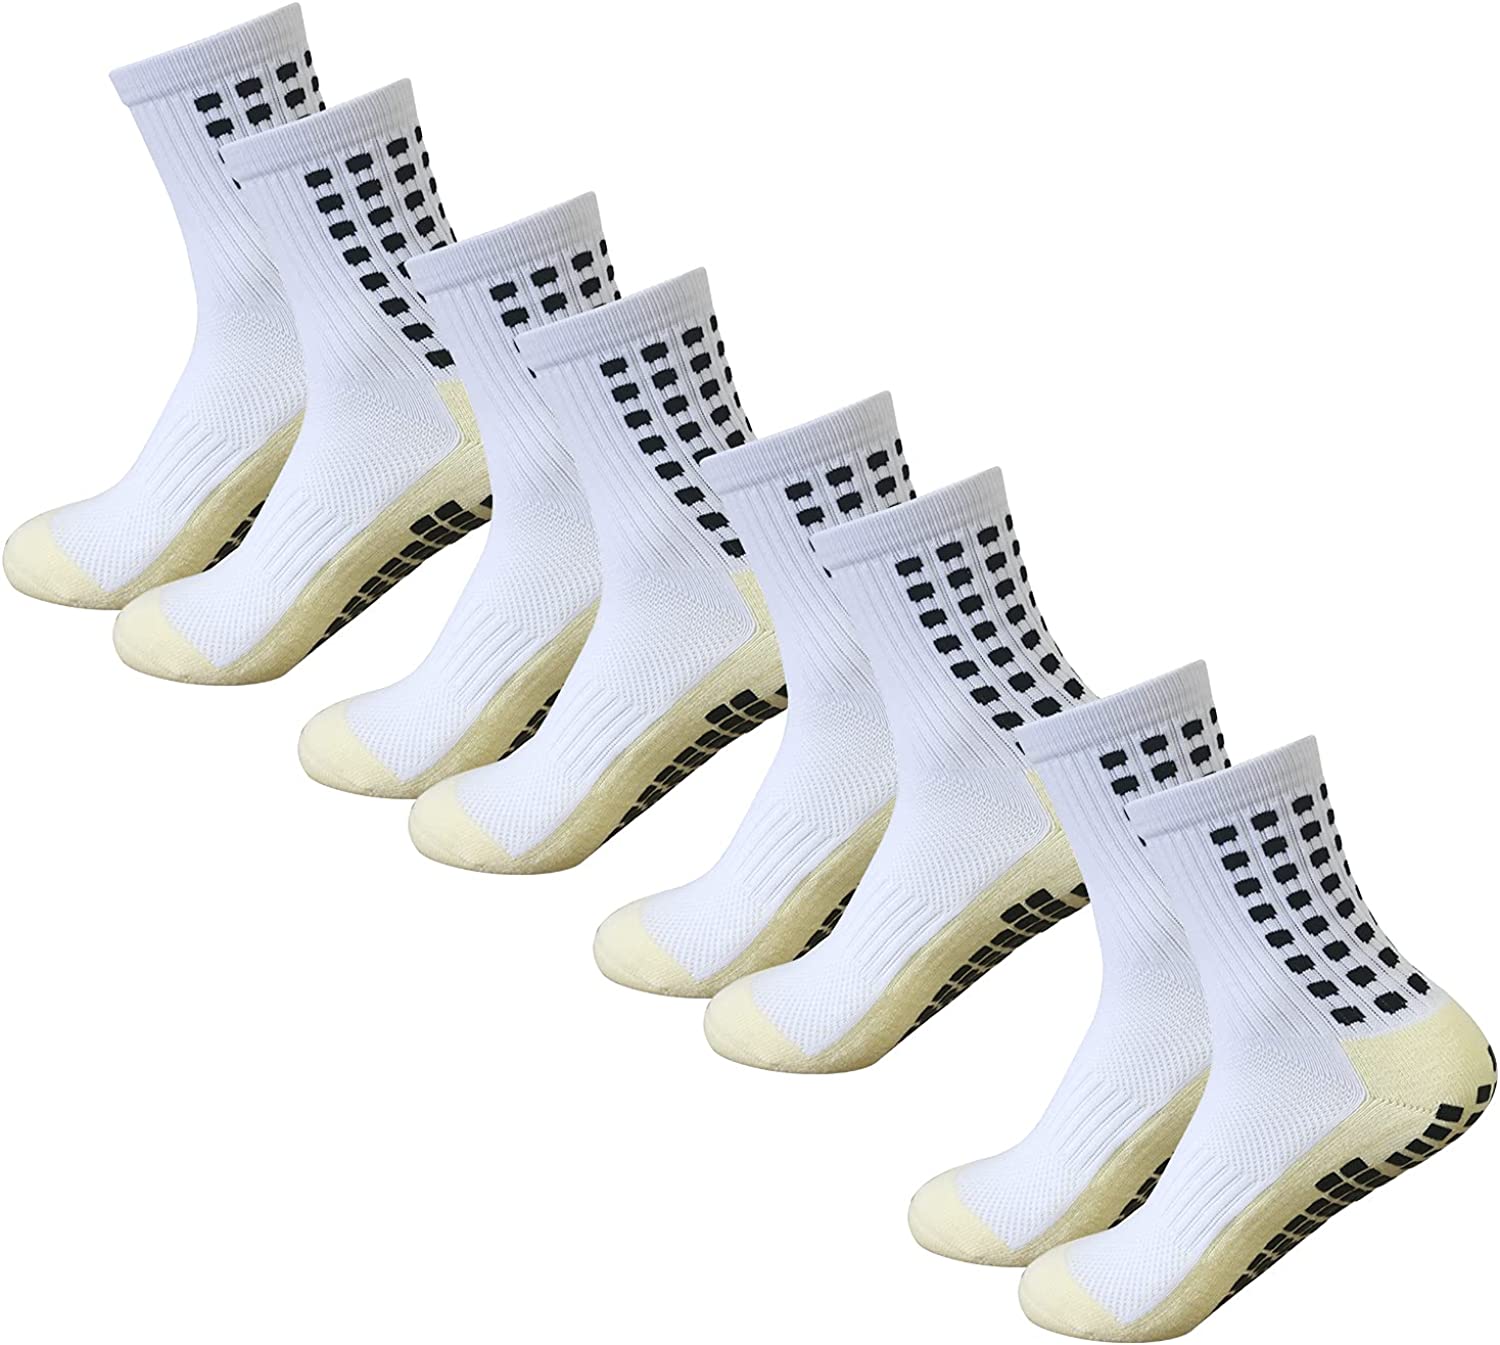 Yufree Men's Soccer Socks Anti Slip Non Slip Grip Pads for